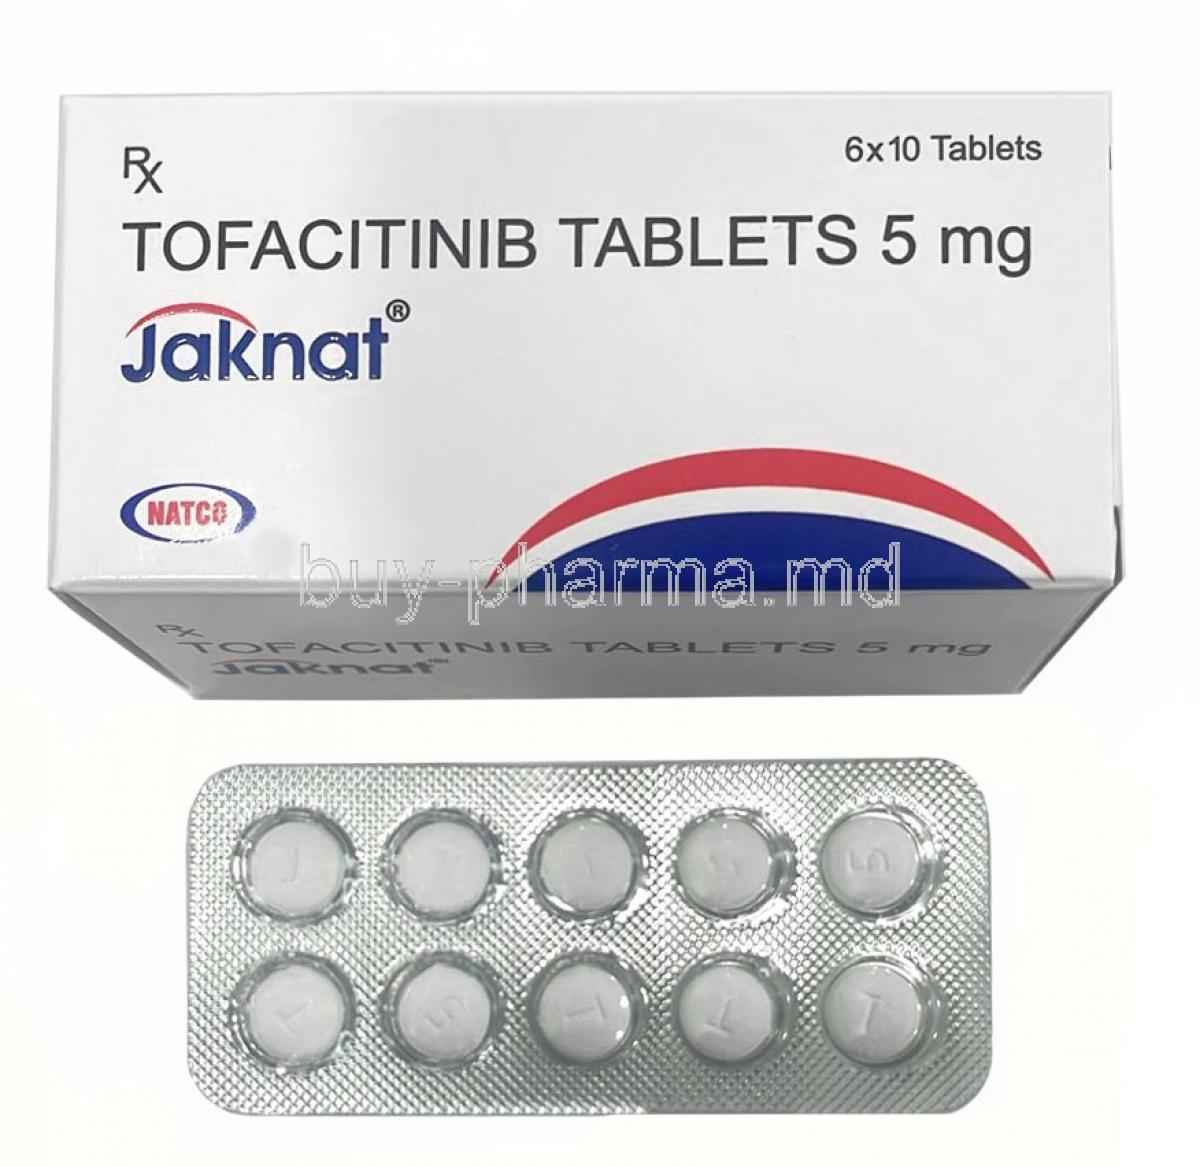 Jaknat 5, Tofacitinib 5mg, Natco Pharma, Box, Blisterpack